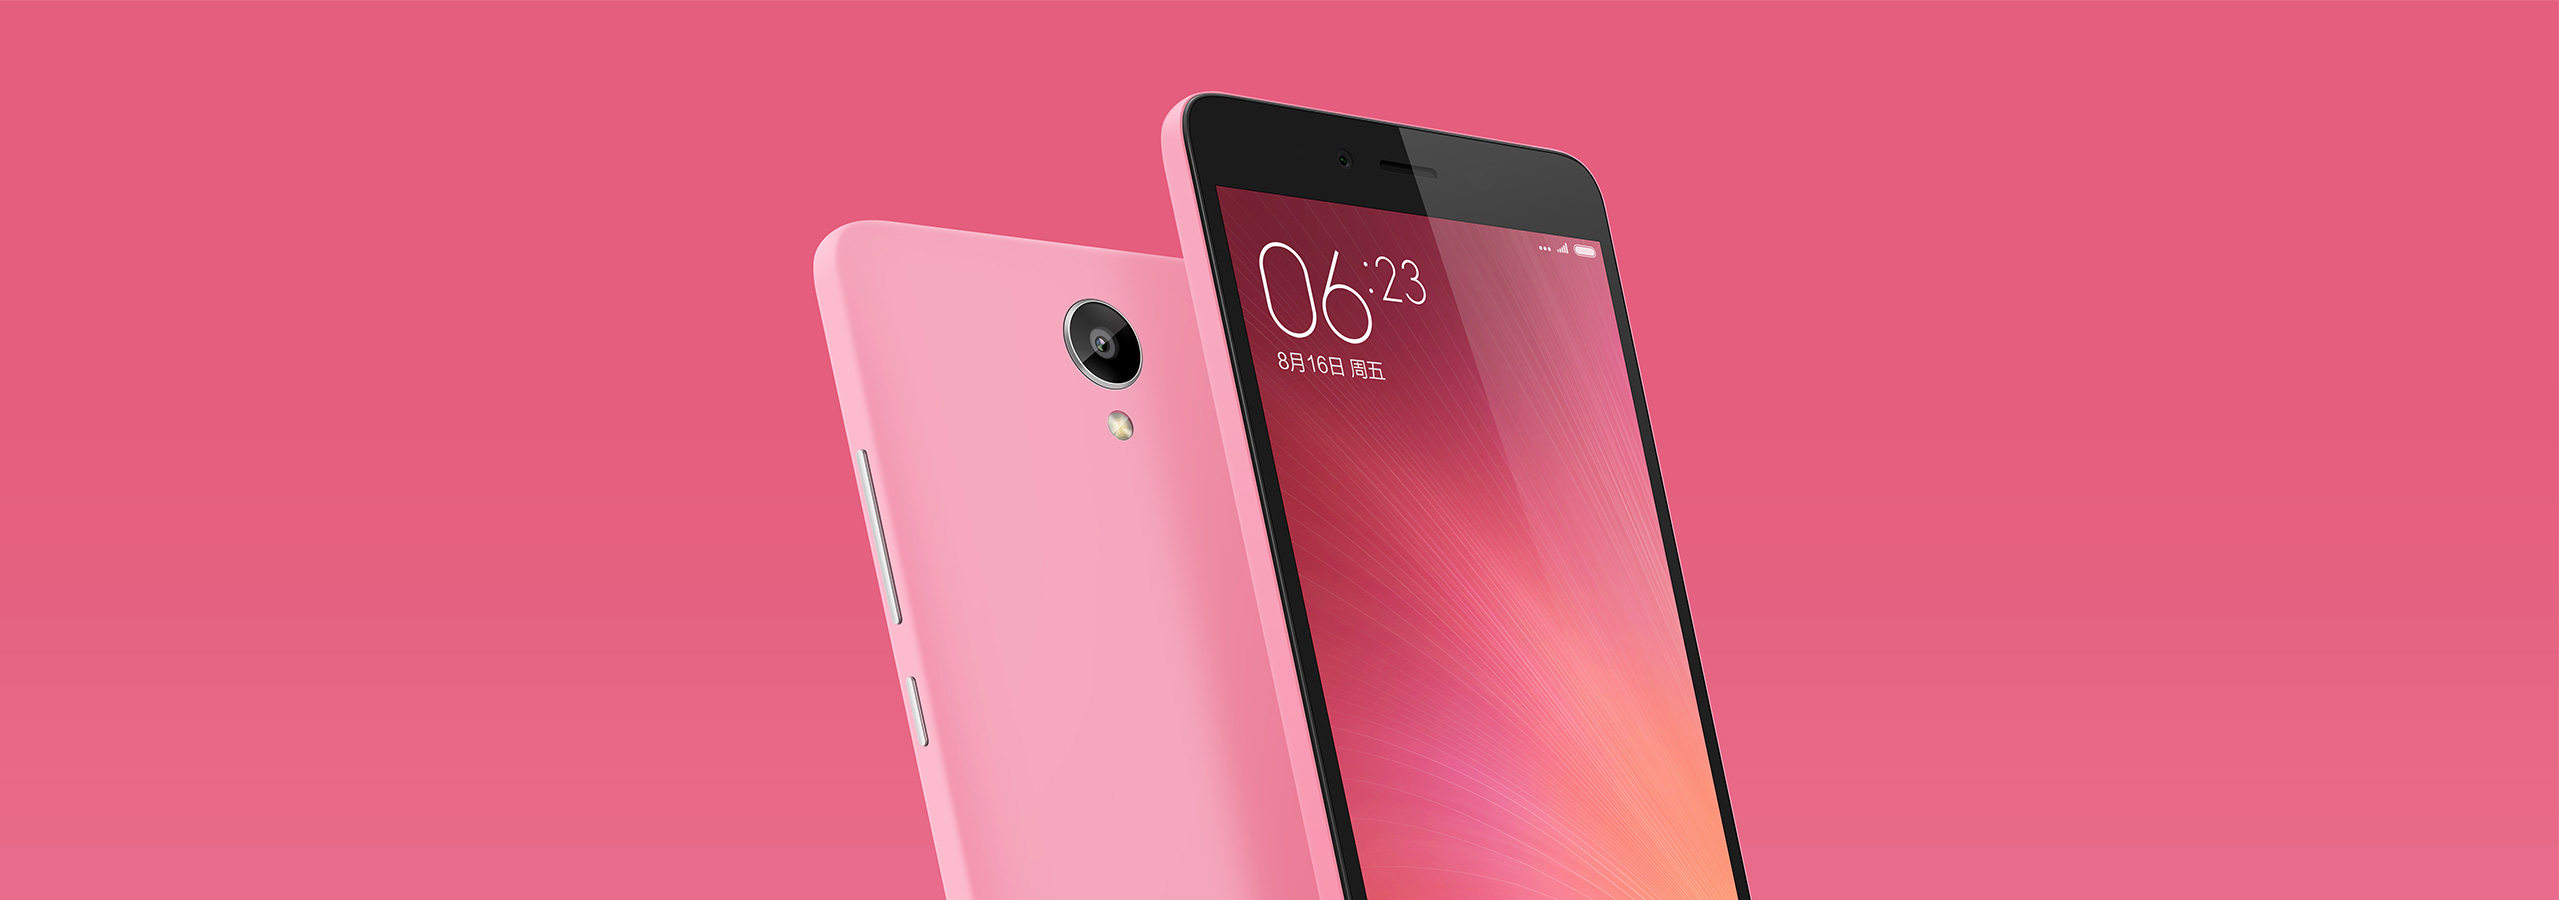 Keindahan warna-warni Xiaomi Redmi Note 2 dalam bingkai foto 